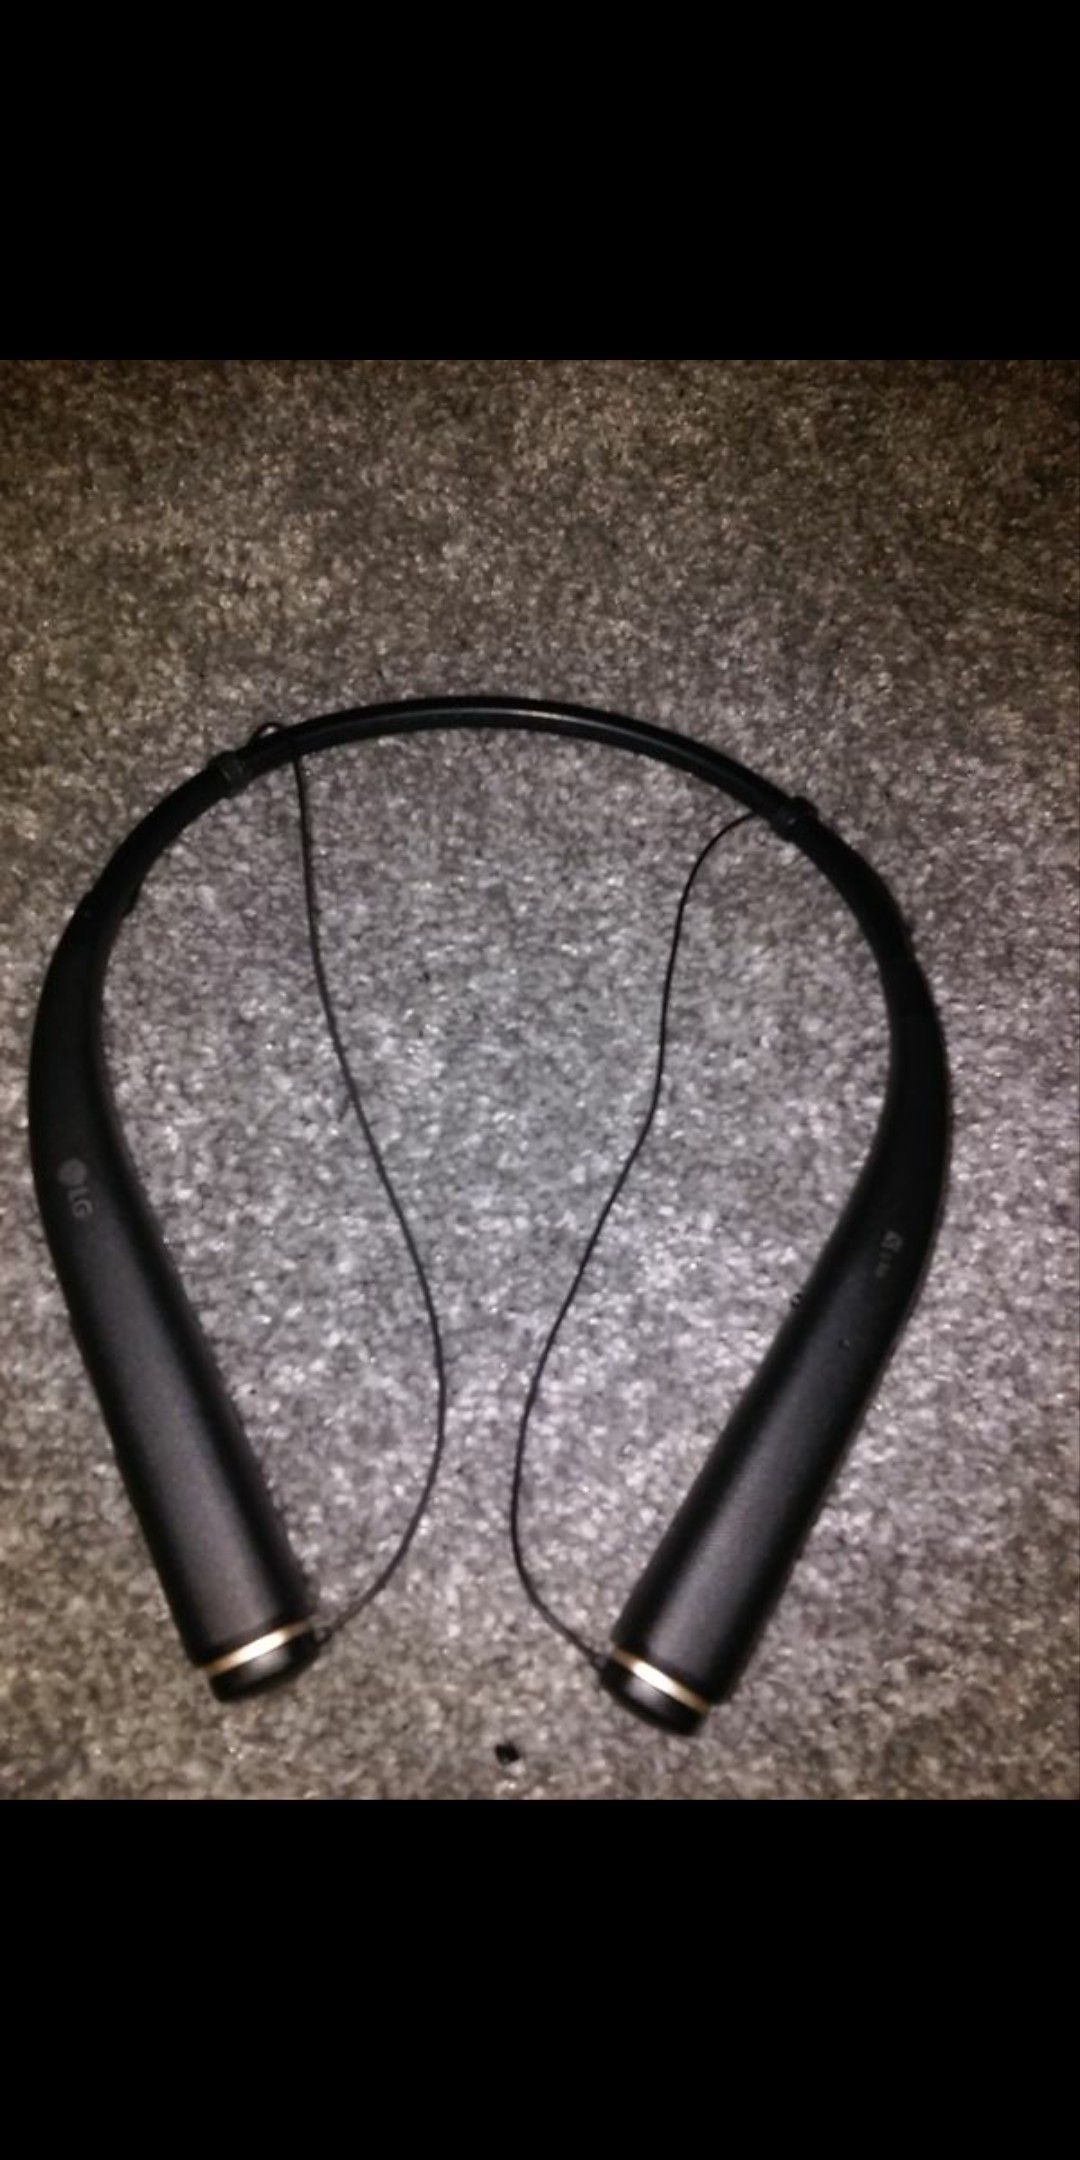 Hbs 780 Lg bluetooth headset